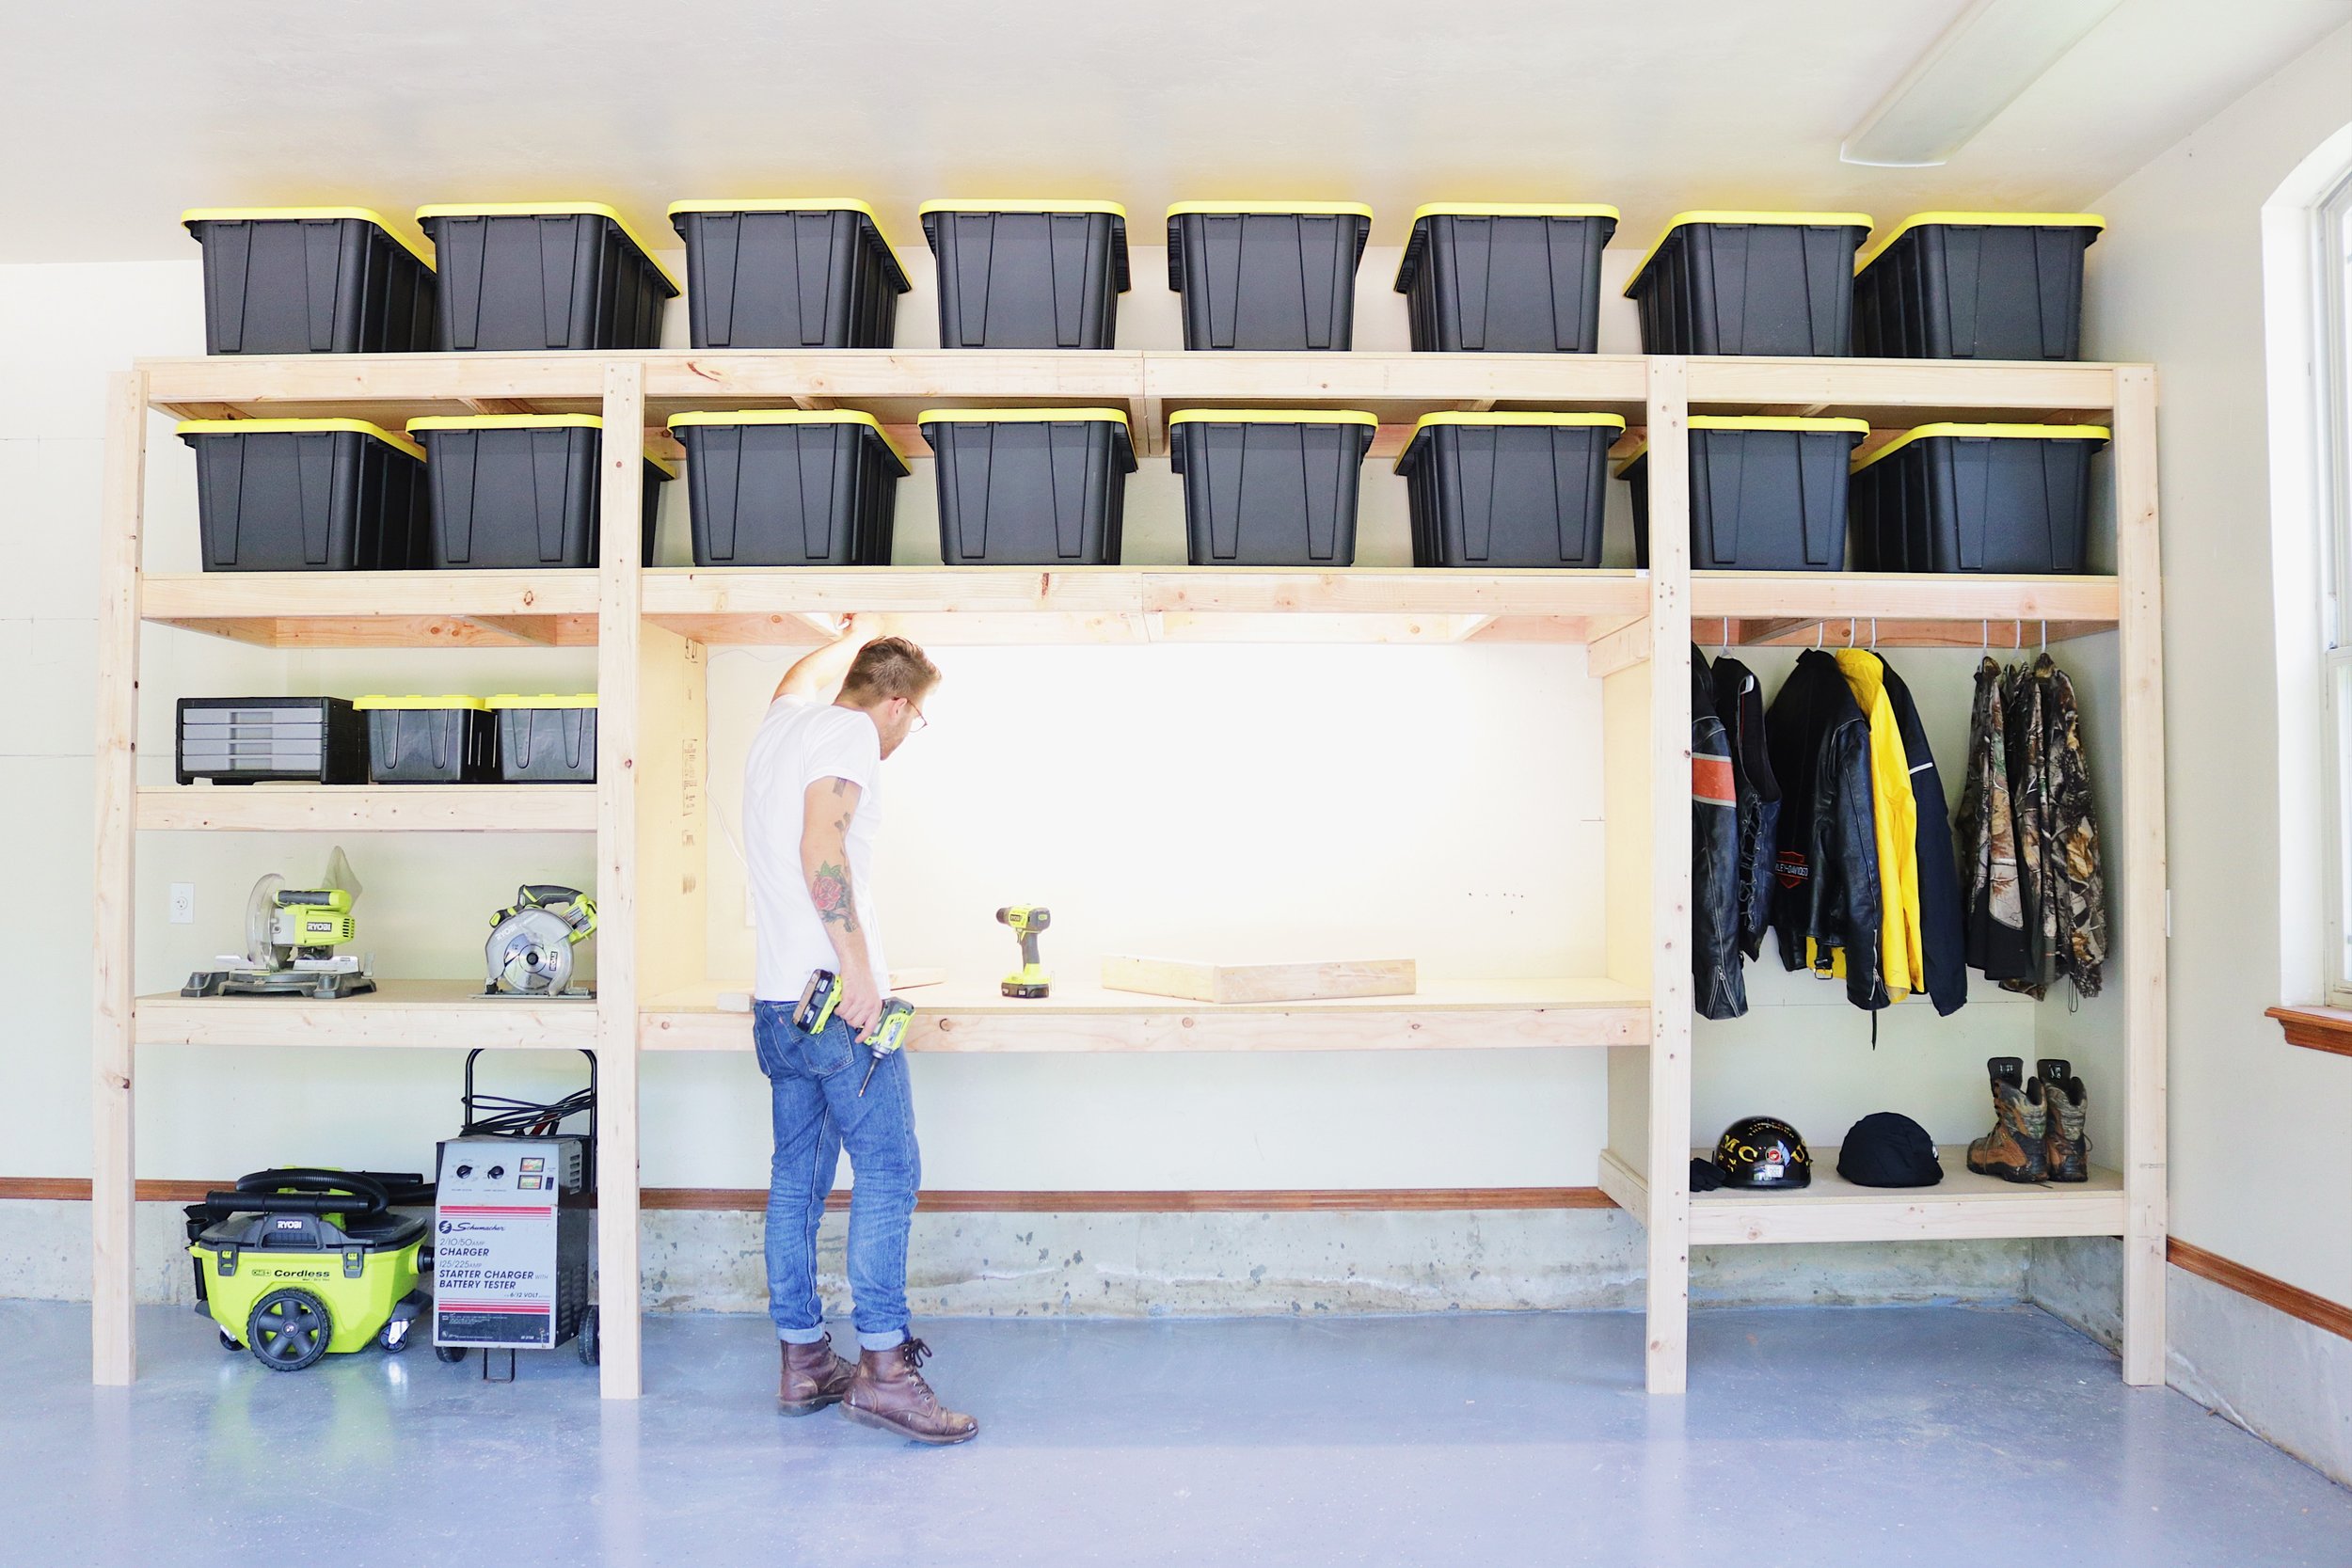 Diy Garage Shelves Modern Builds, Workbench And Shelving Storage System